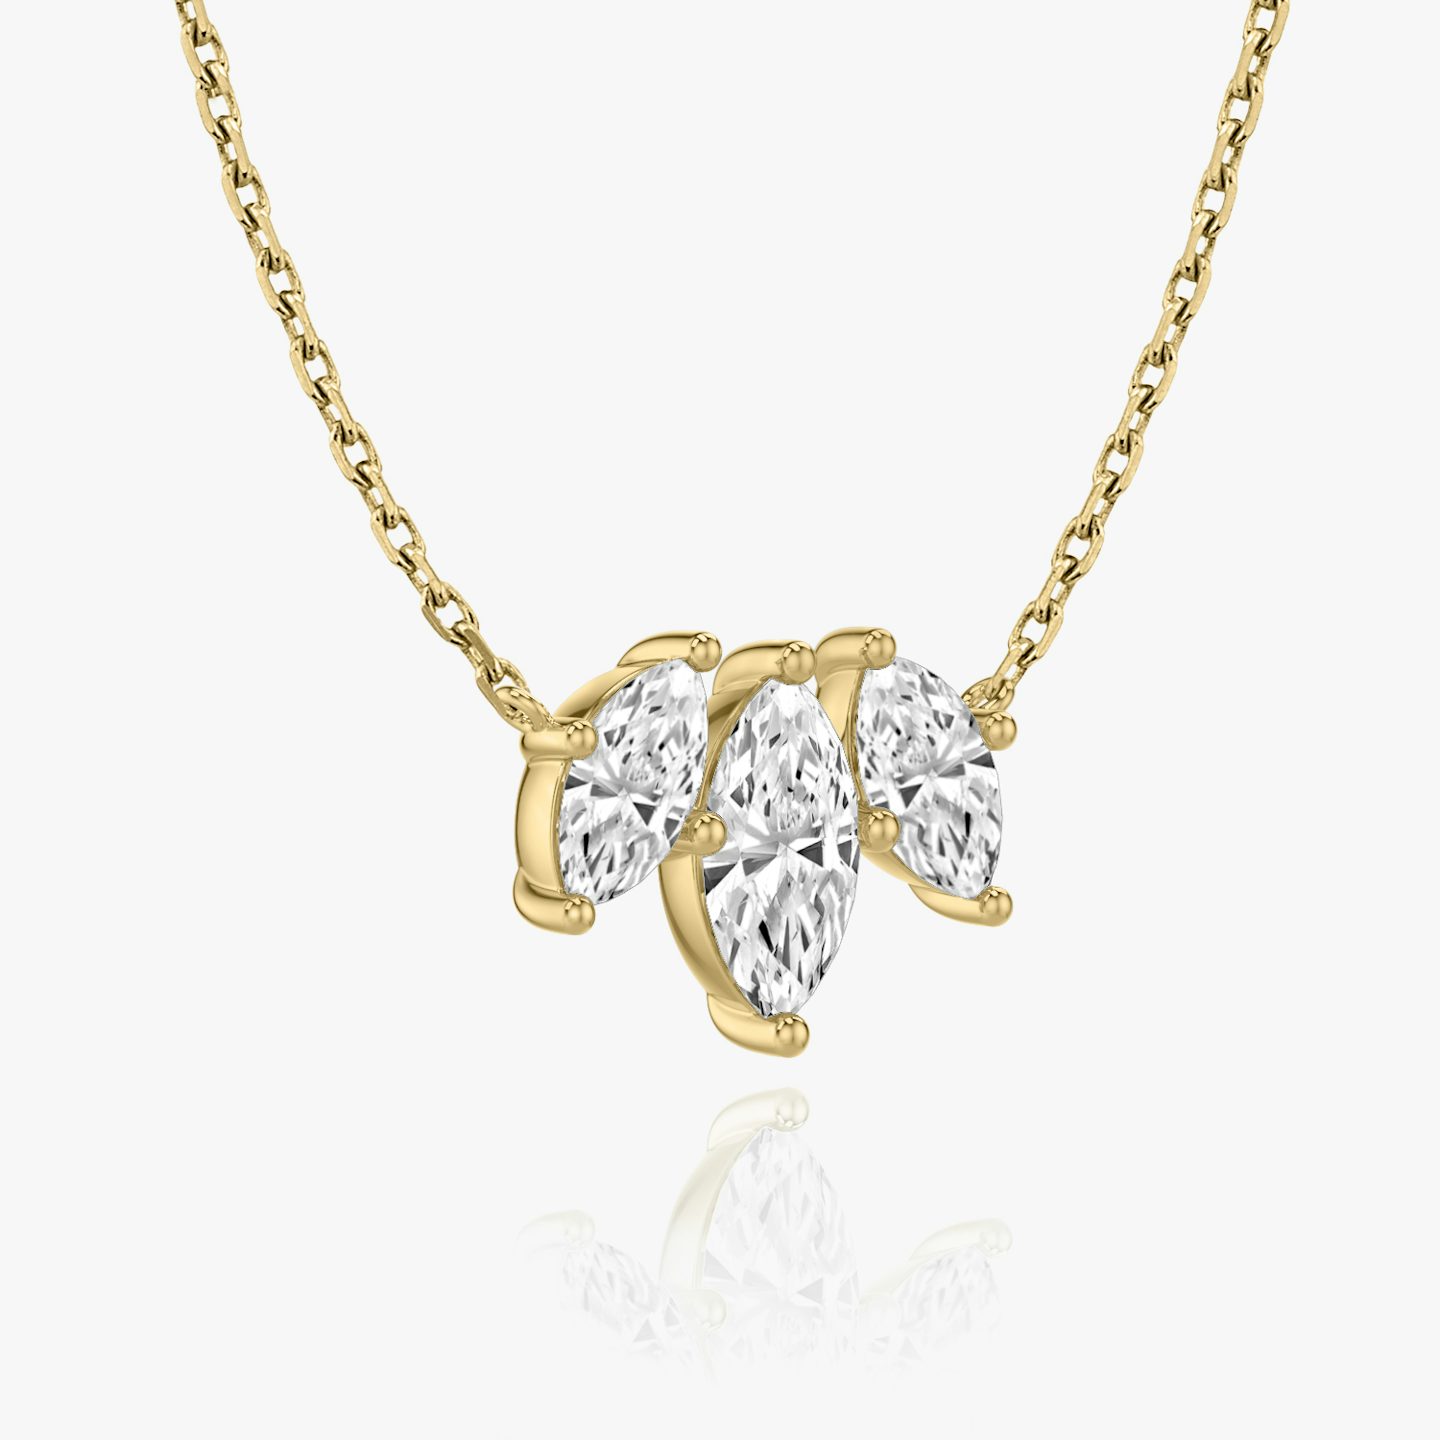 Arc Necklace | Marquise | 14k | Yellow Gold | diamondCount: 3 | diamondSize: large | chainLength: 16-18